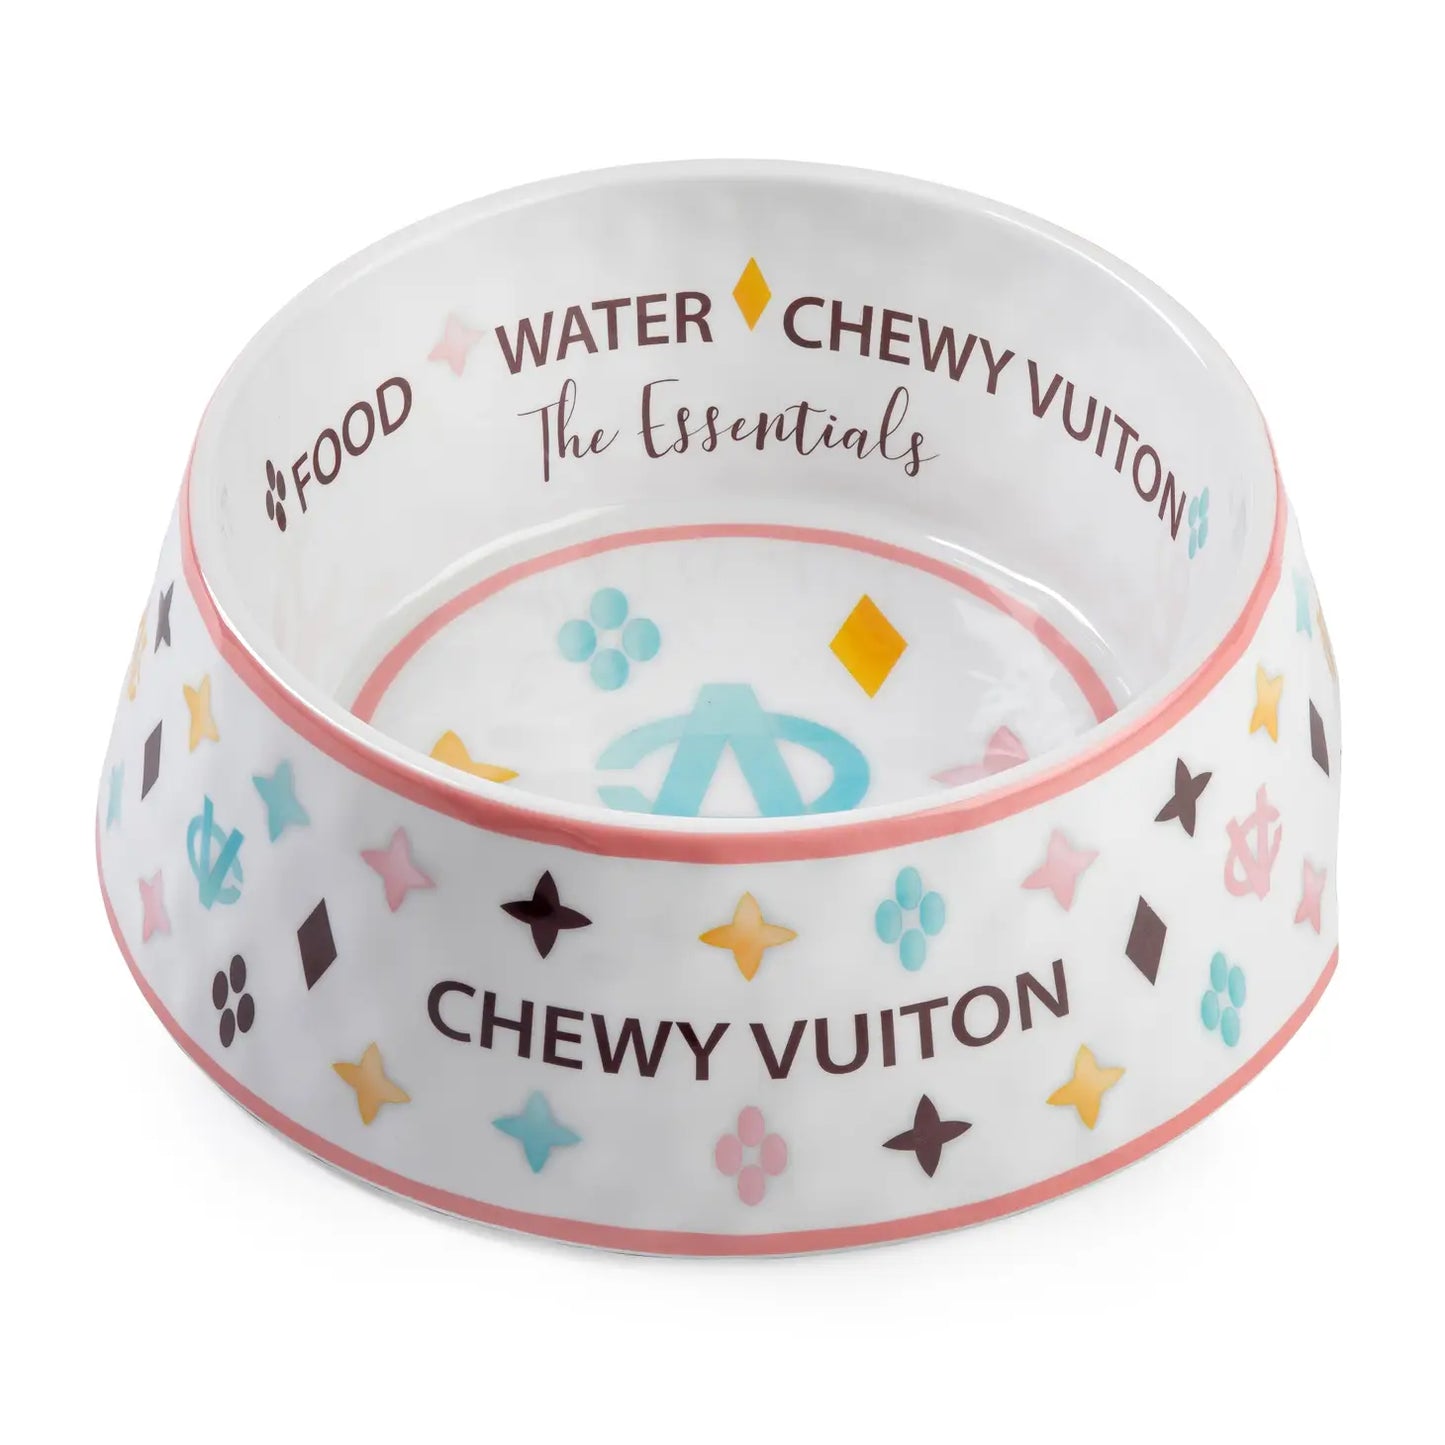 White Chewy Vuiton Bowl - 3 Sizes!! Dog Bowls